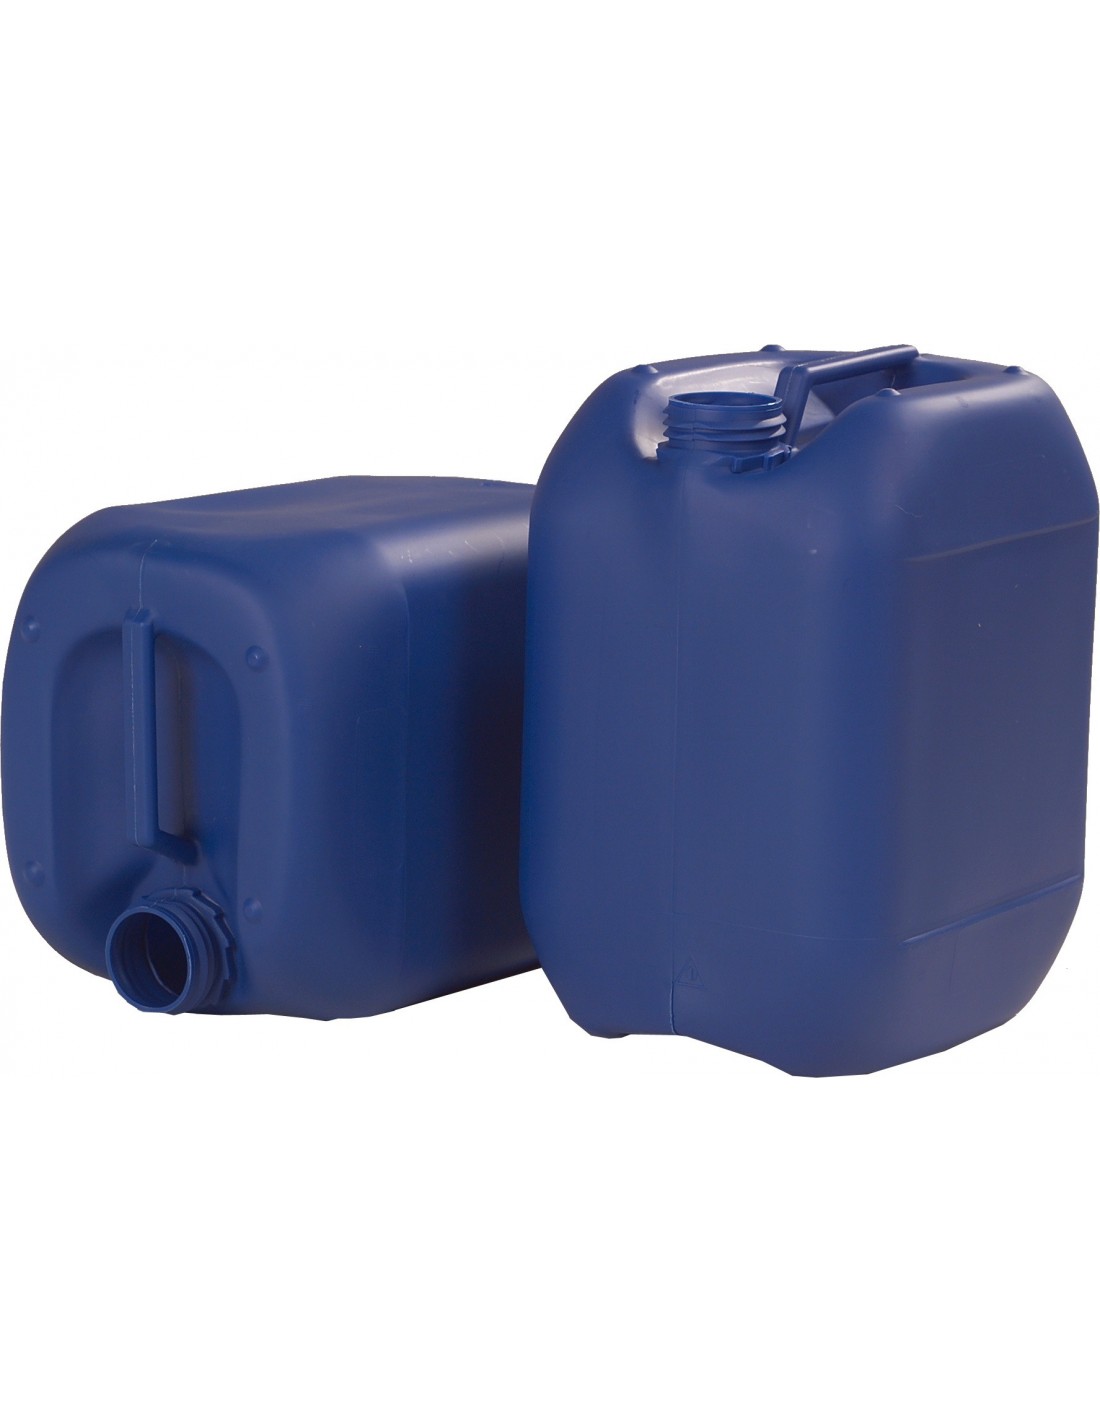 Wasserkanister 20 Liter lebensmittelecht blau oder natur Farbe blau